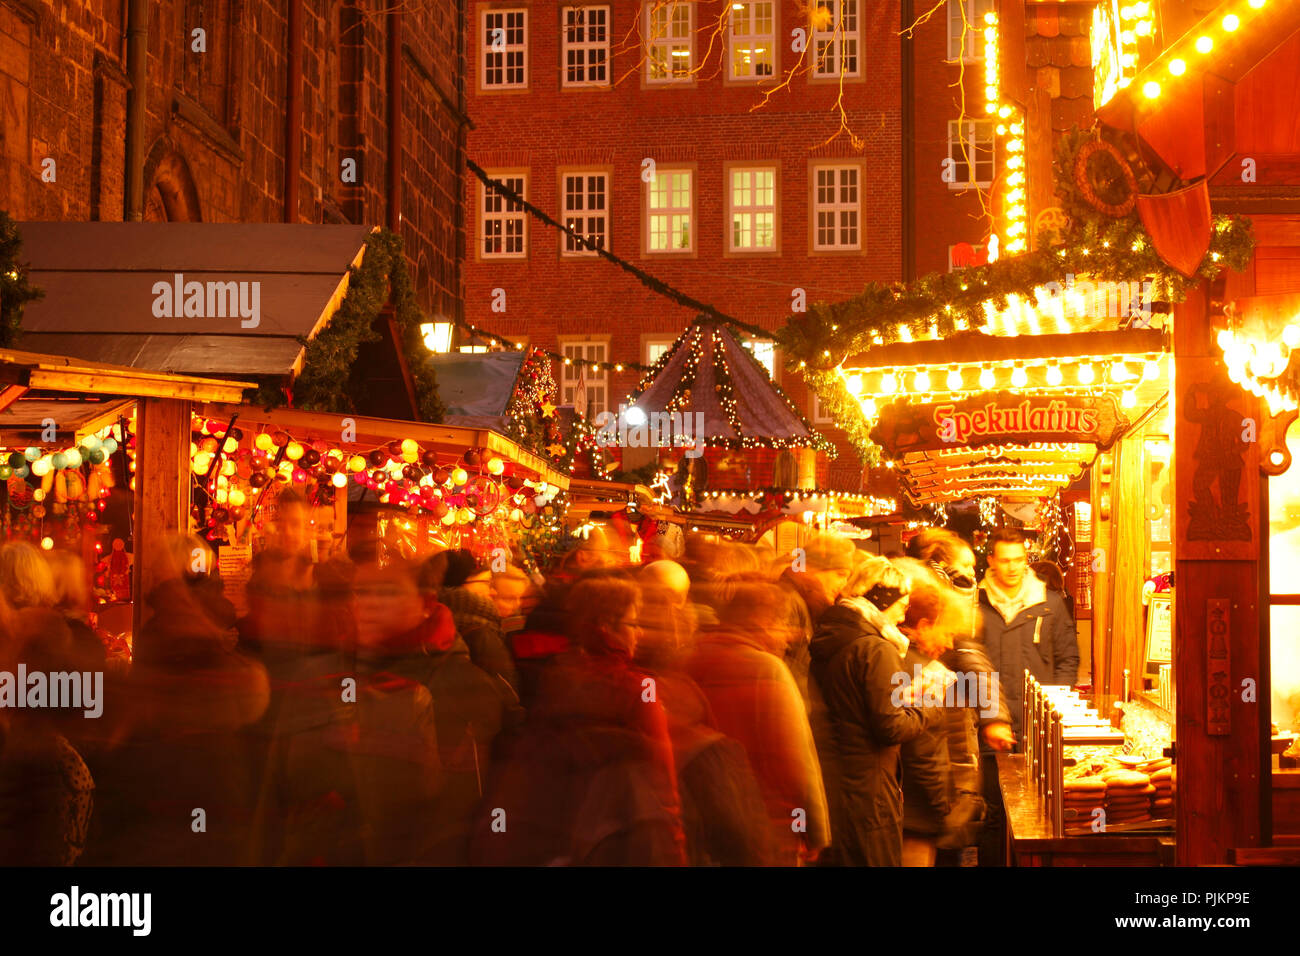 Liebfrauen church yard and Christmas Market Stalls at dusk, Bremen, Germany Stock Photo